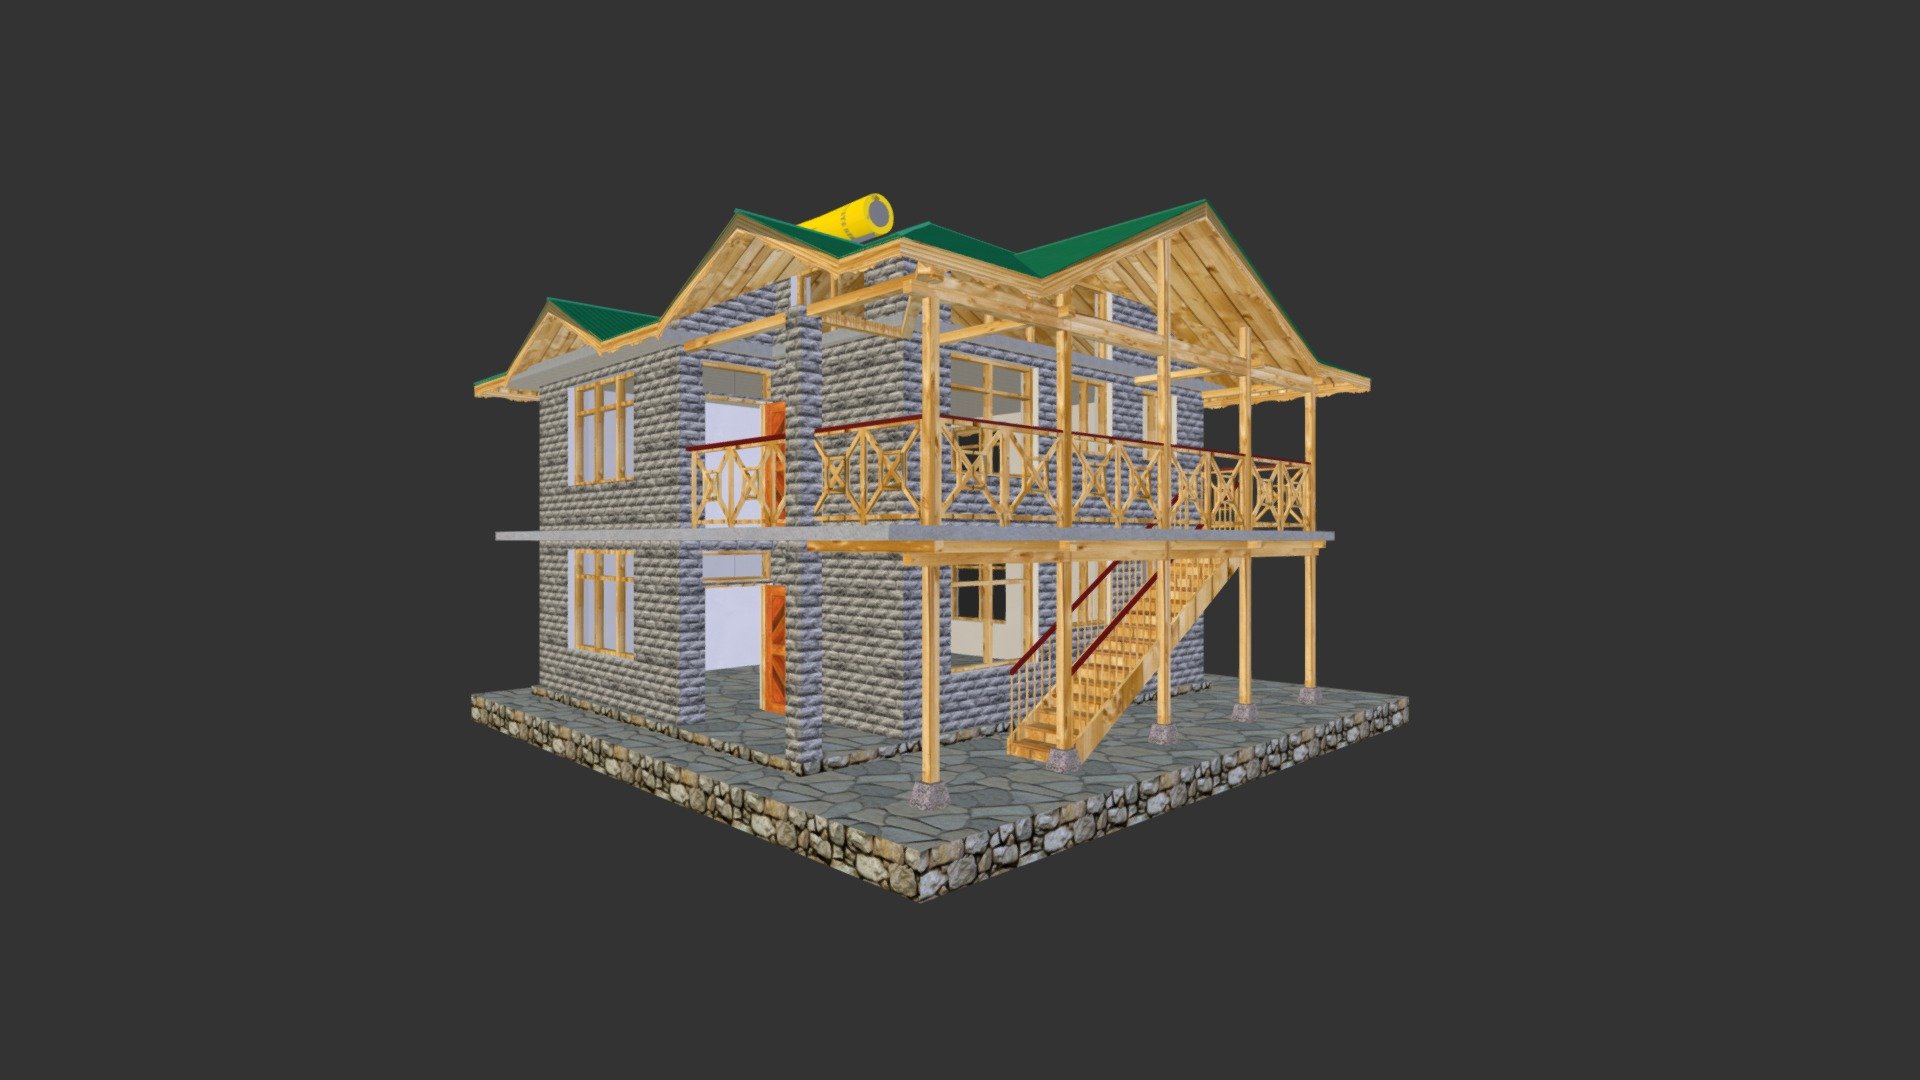 Simple local House in Manali area - Desi Building - 3D model by Francesco Coldesina (@topfrank2013) 3d model